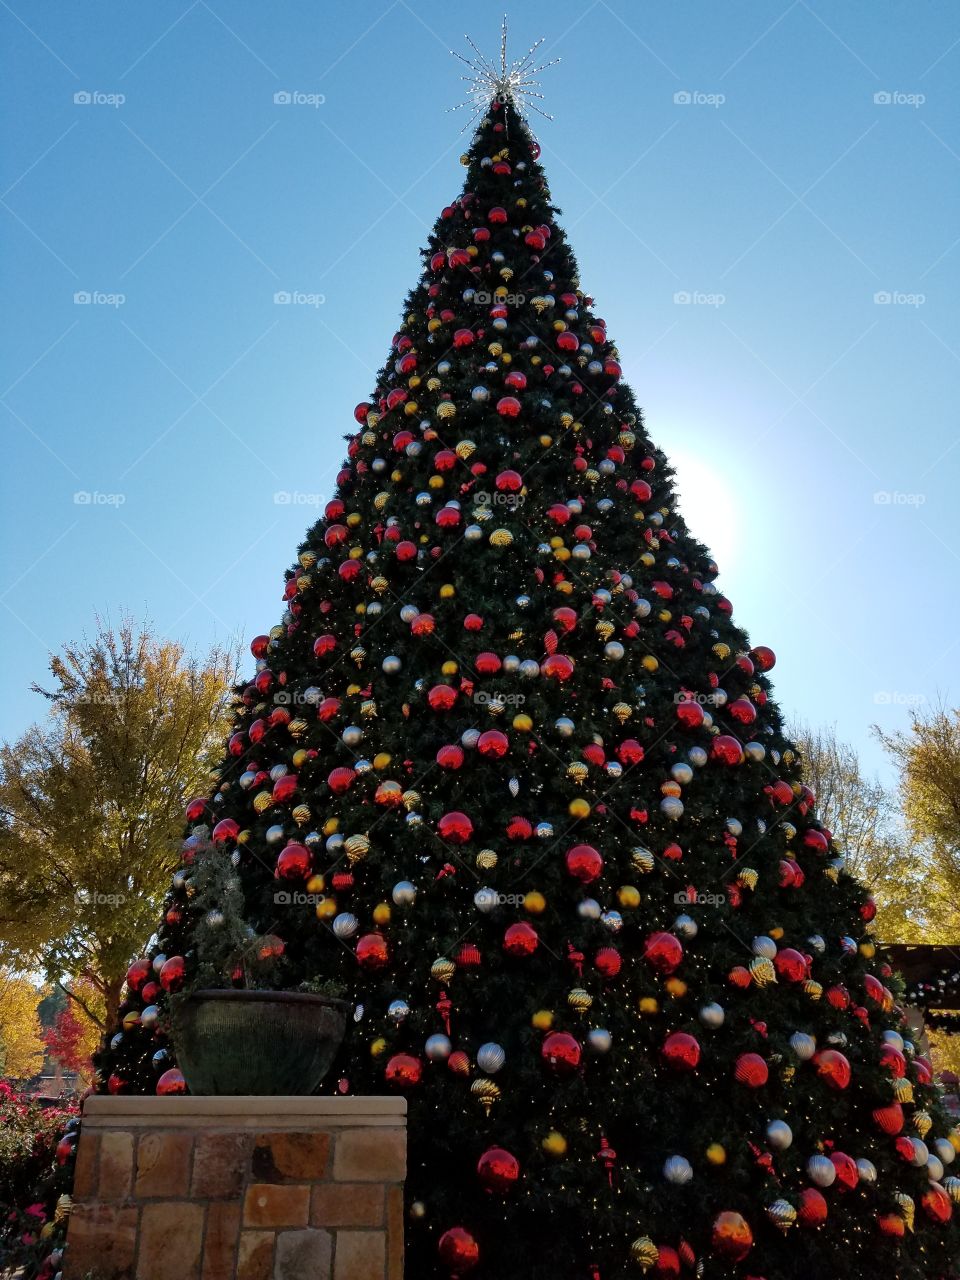 Christmas in Georgia